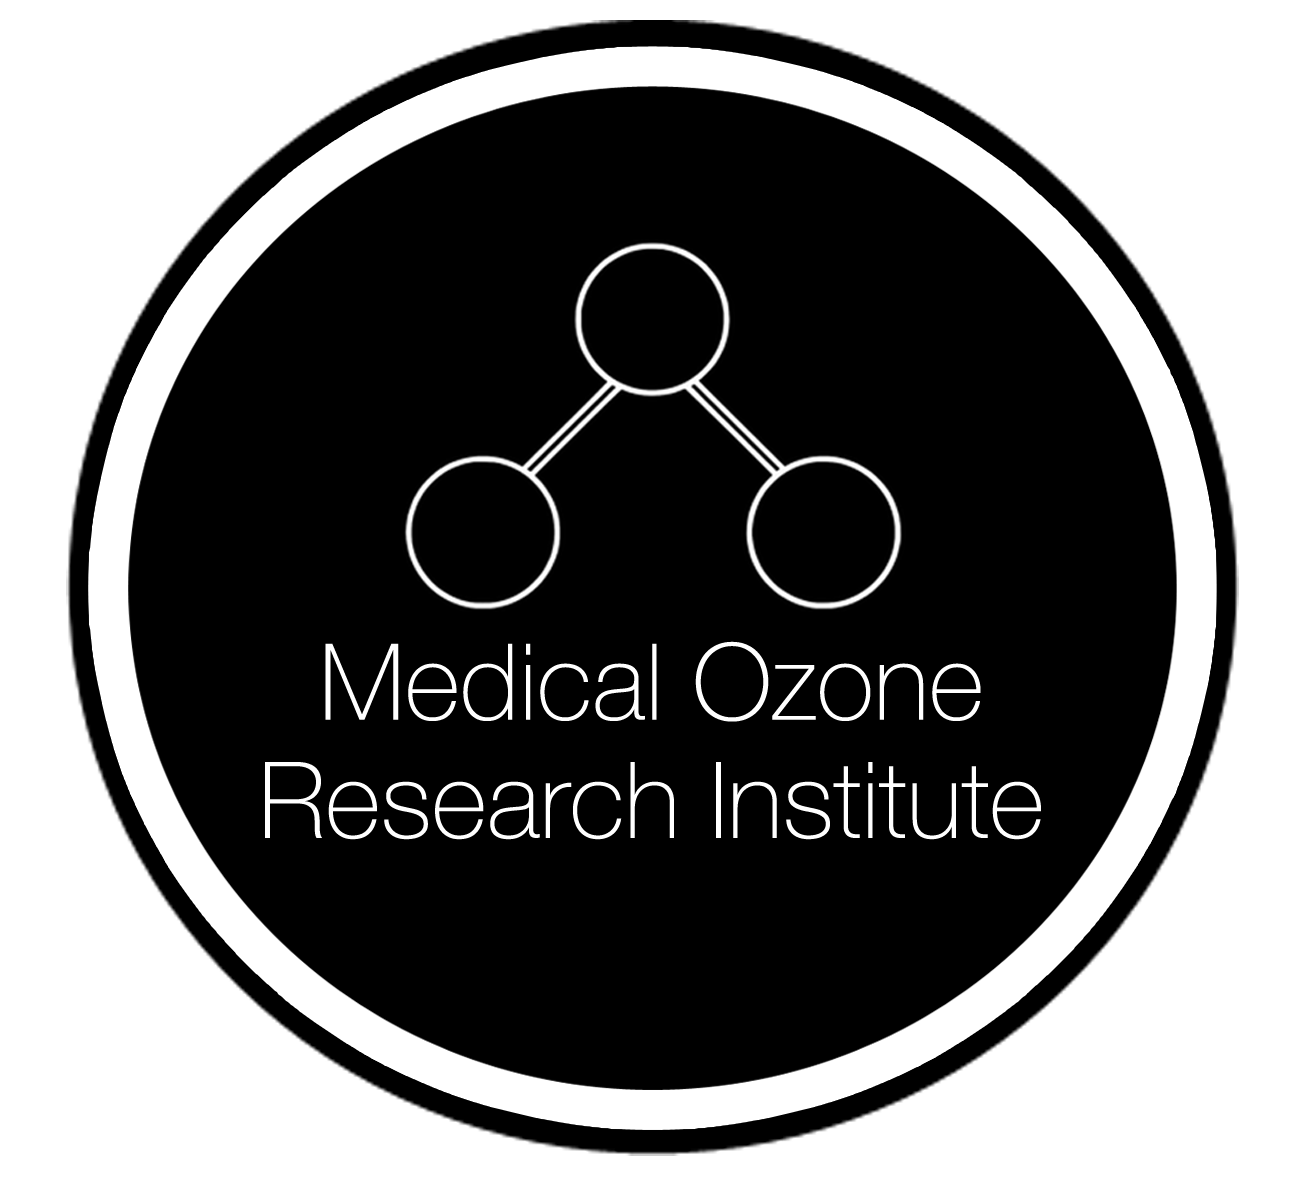 Medical Ozone Research Institute